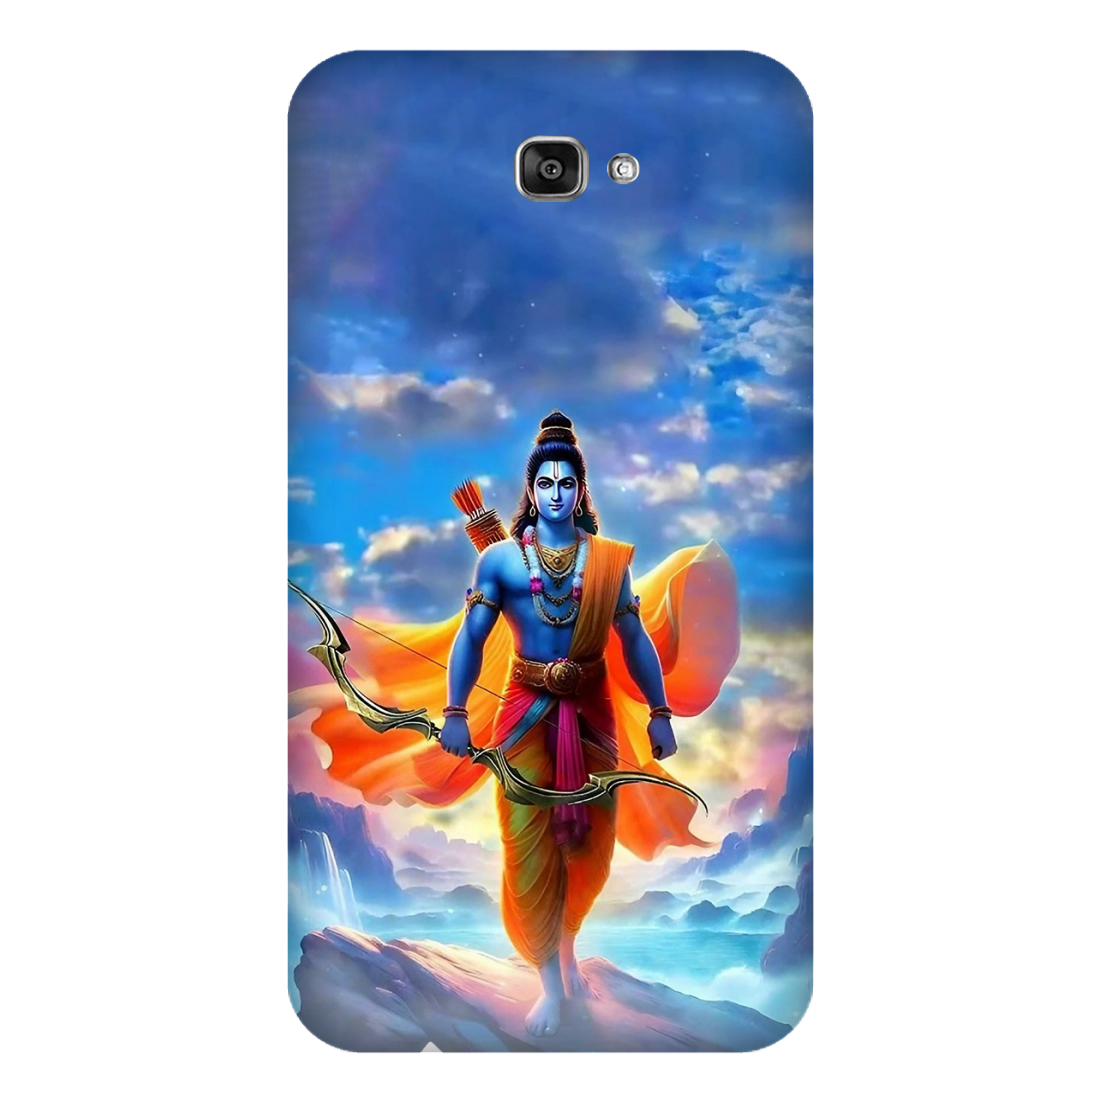 Divine Archer Amidst the Clouds Rama Case Samsung Galaxy J7 Prime